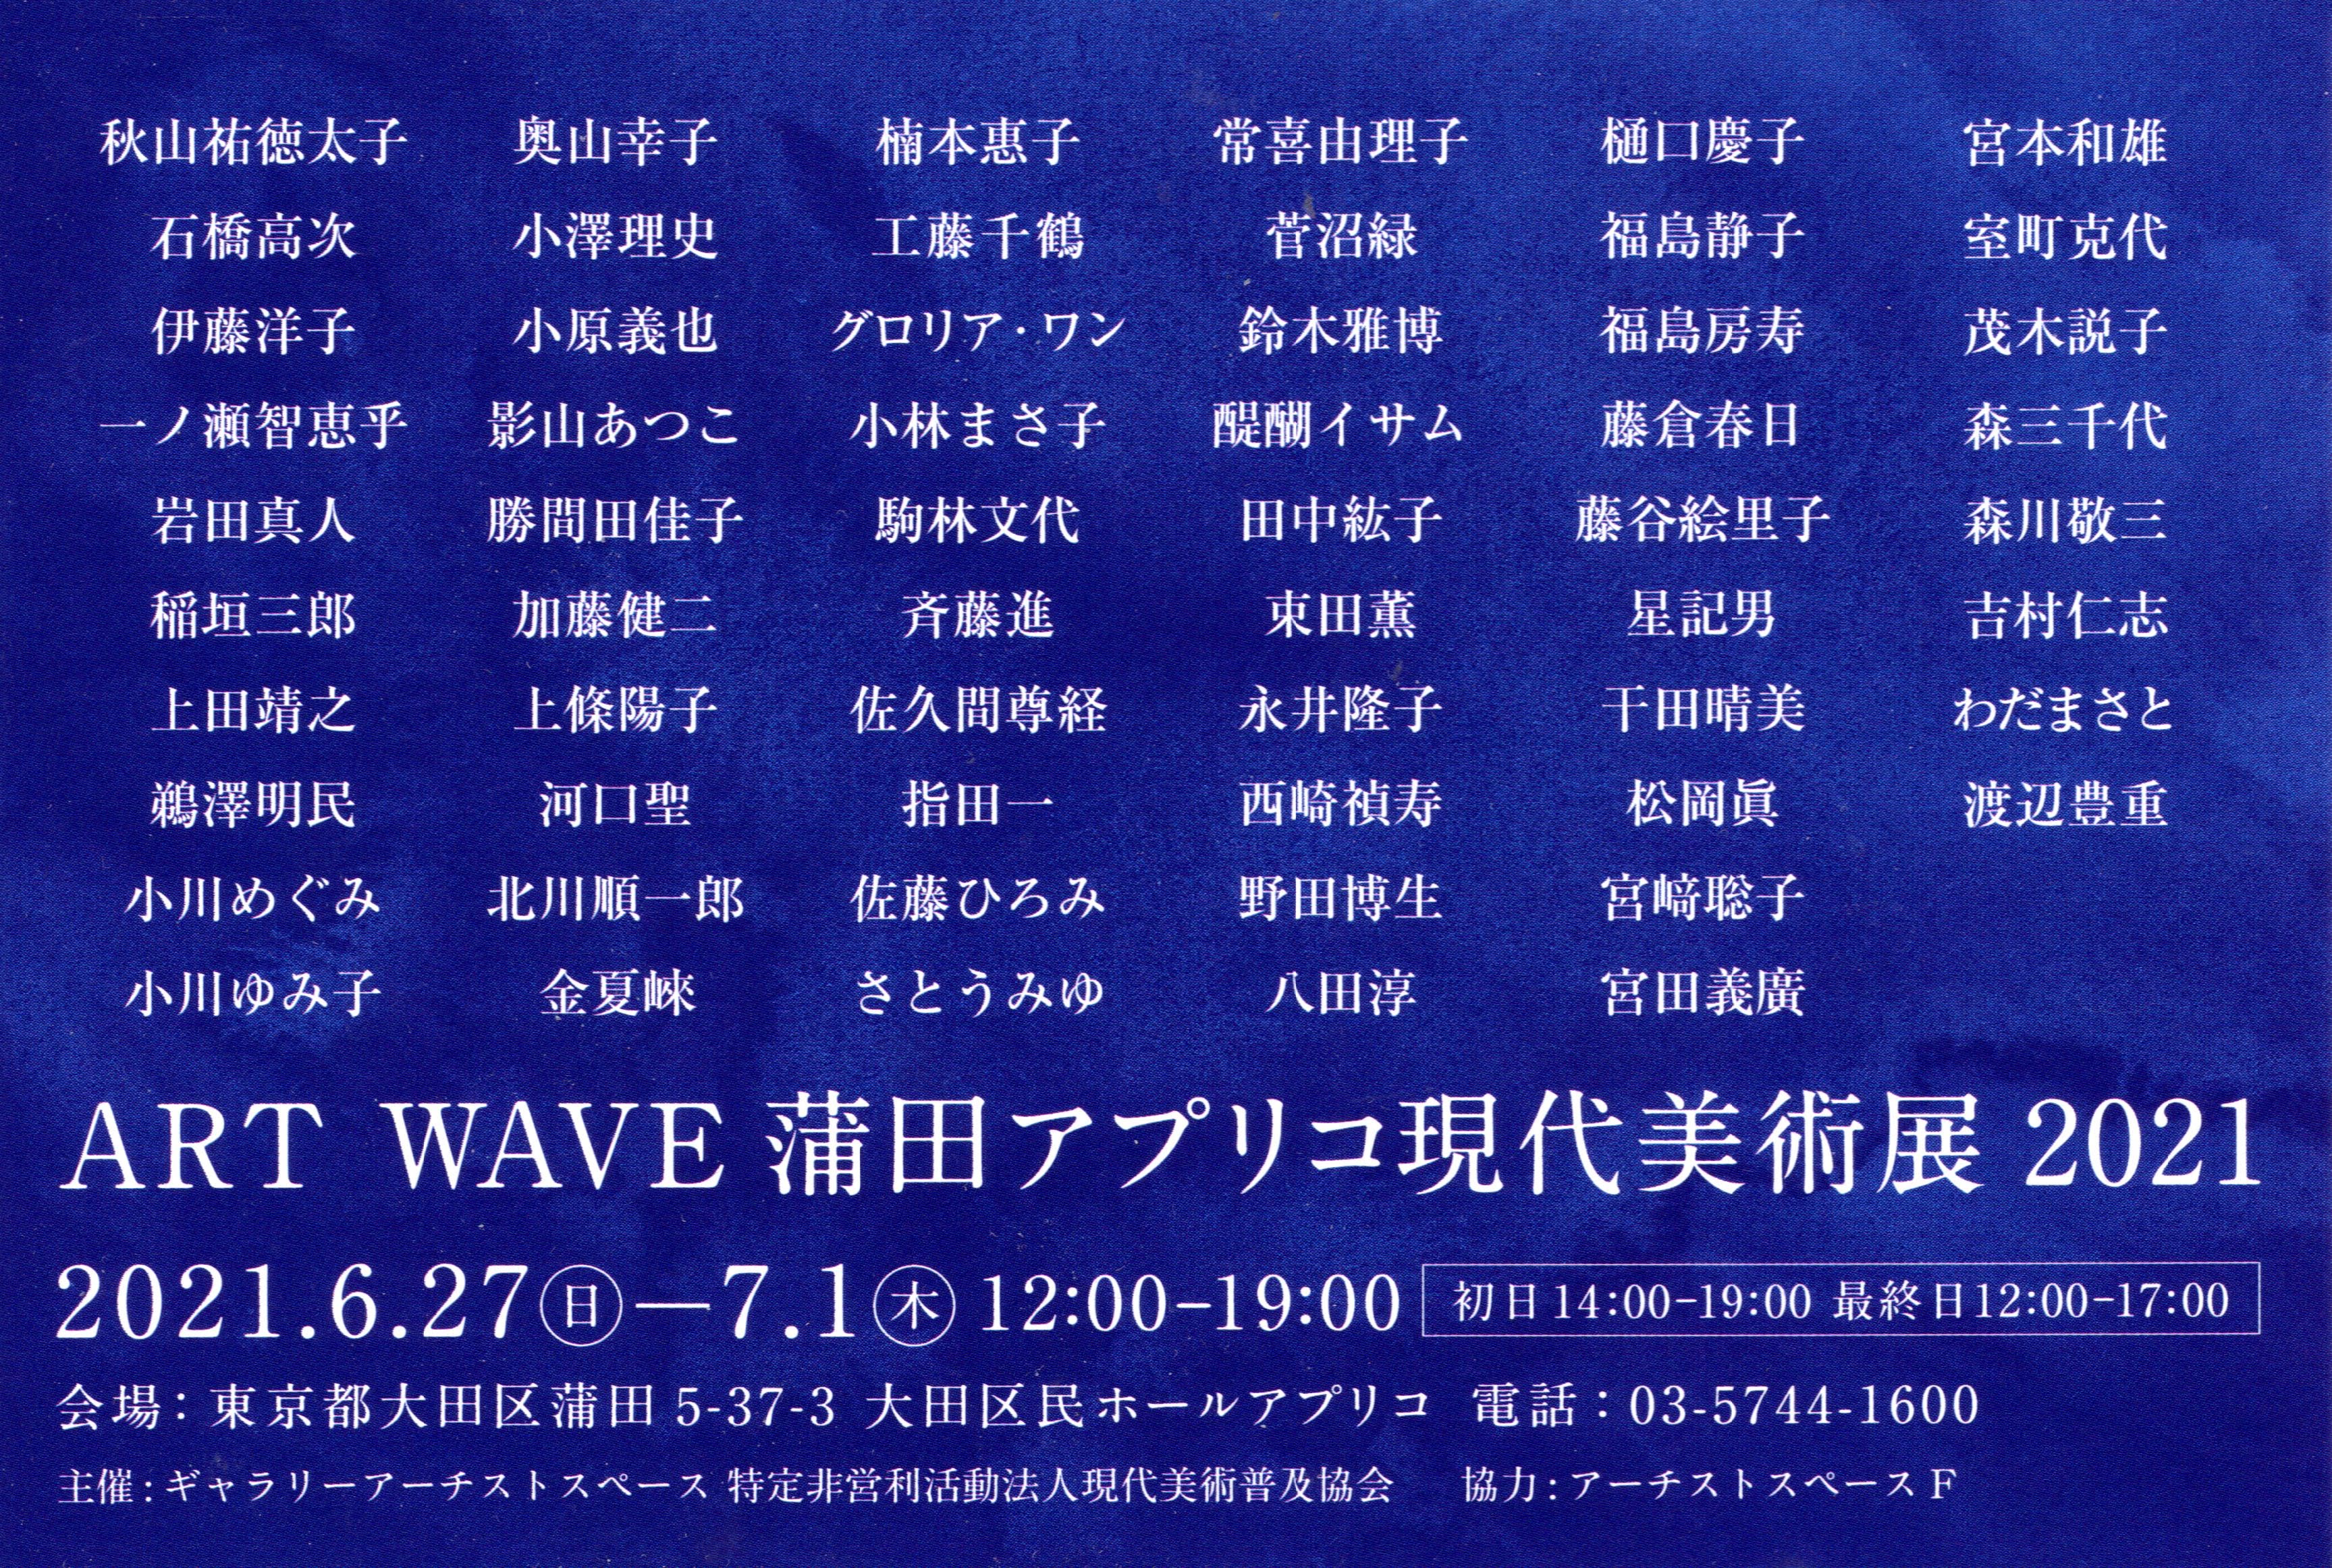 ART WAVE 蒲田アプリコ現代美術展 2021 2021/06/27 Sun - 2021/07/01 Thu